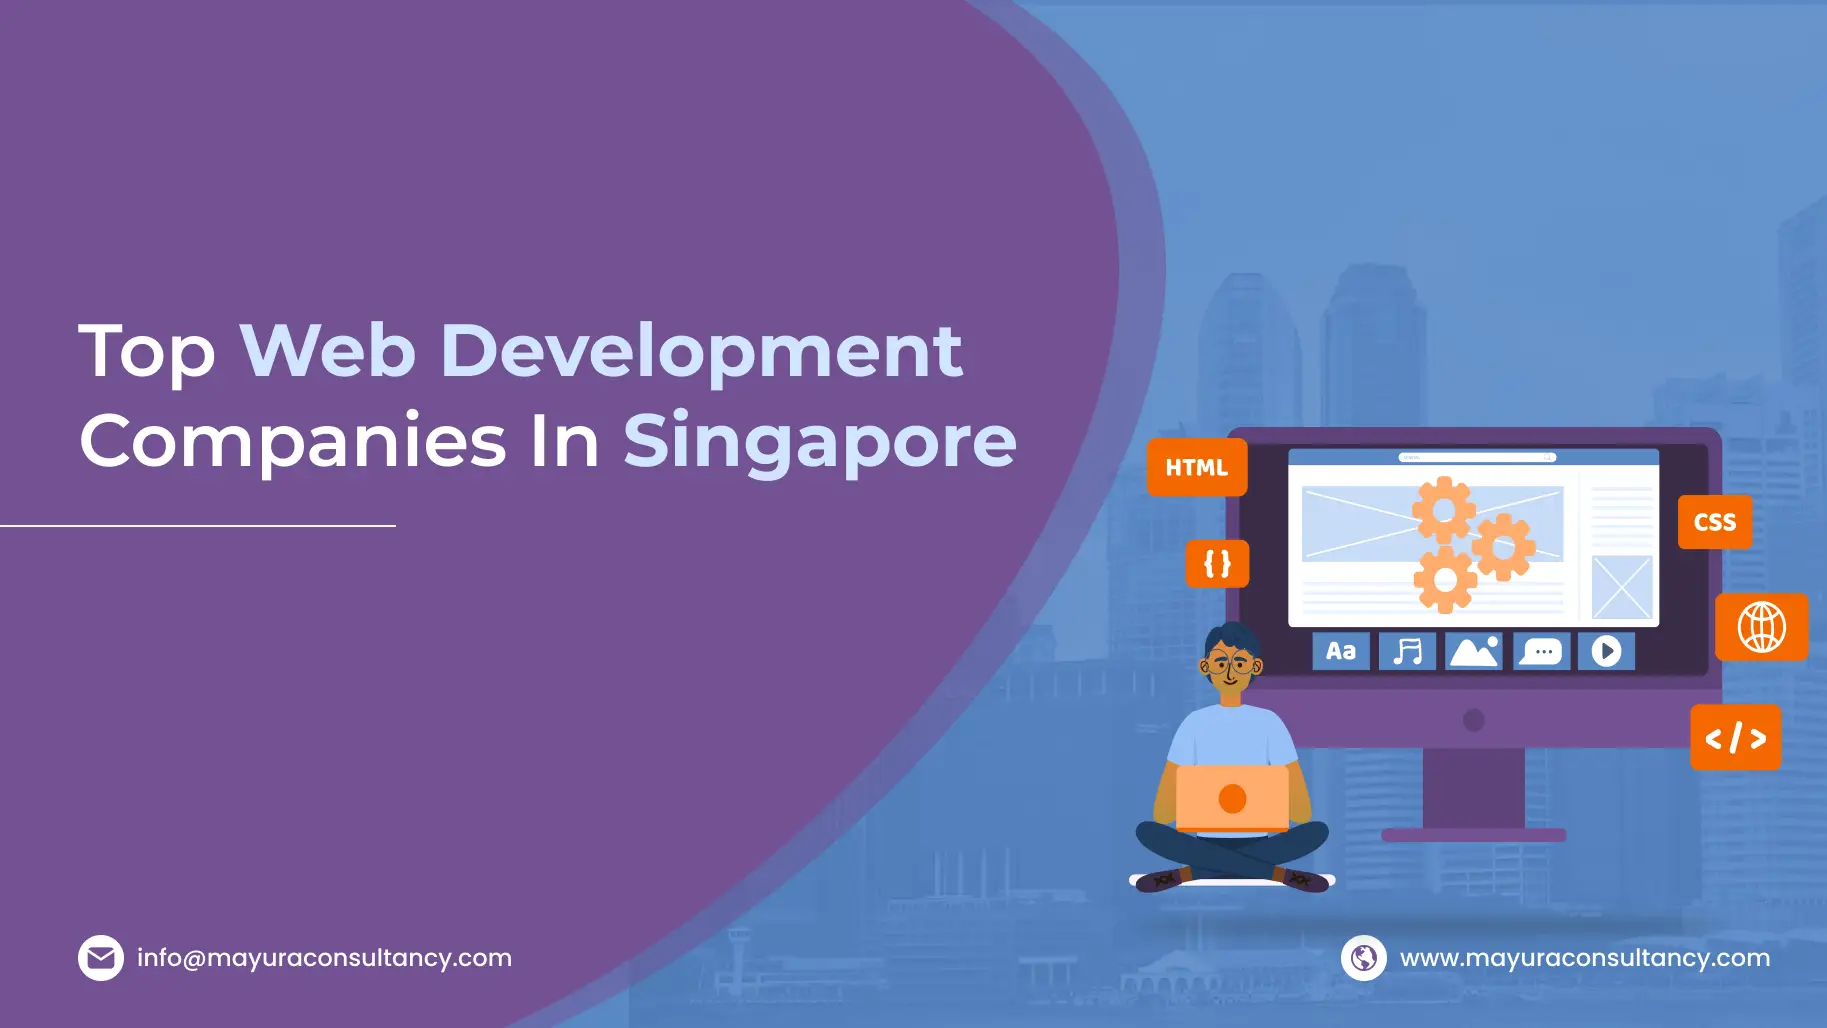 Top Web Development Companies in Singapore